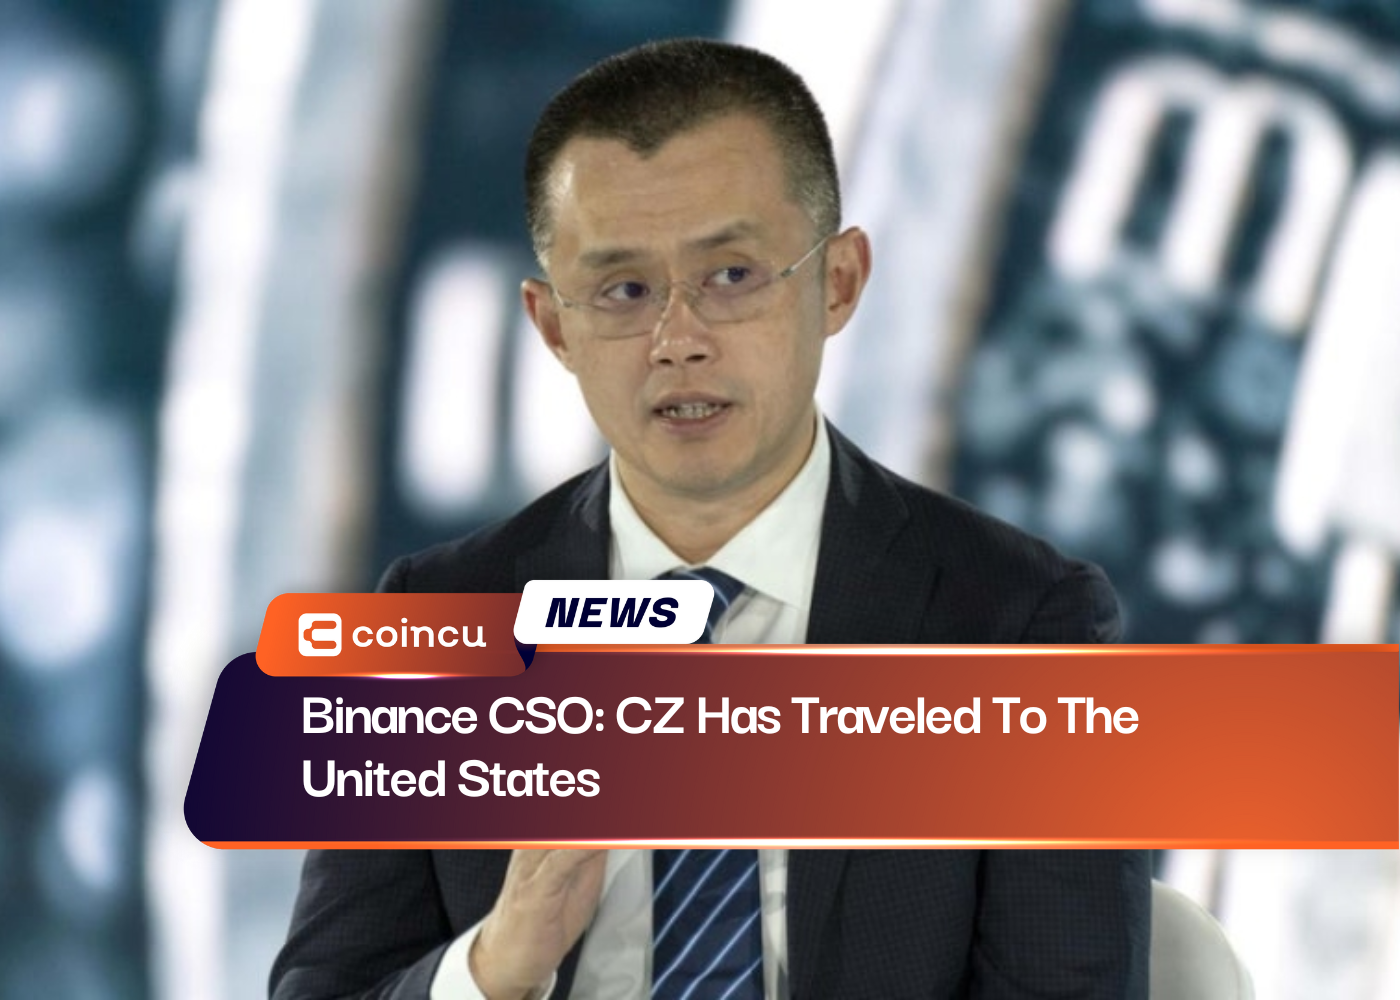 Binance CSO: CZ Has Traveled To The United States